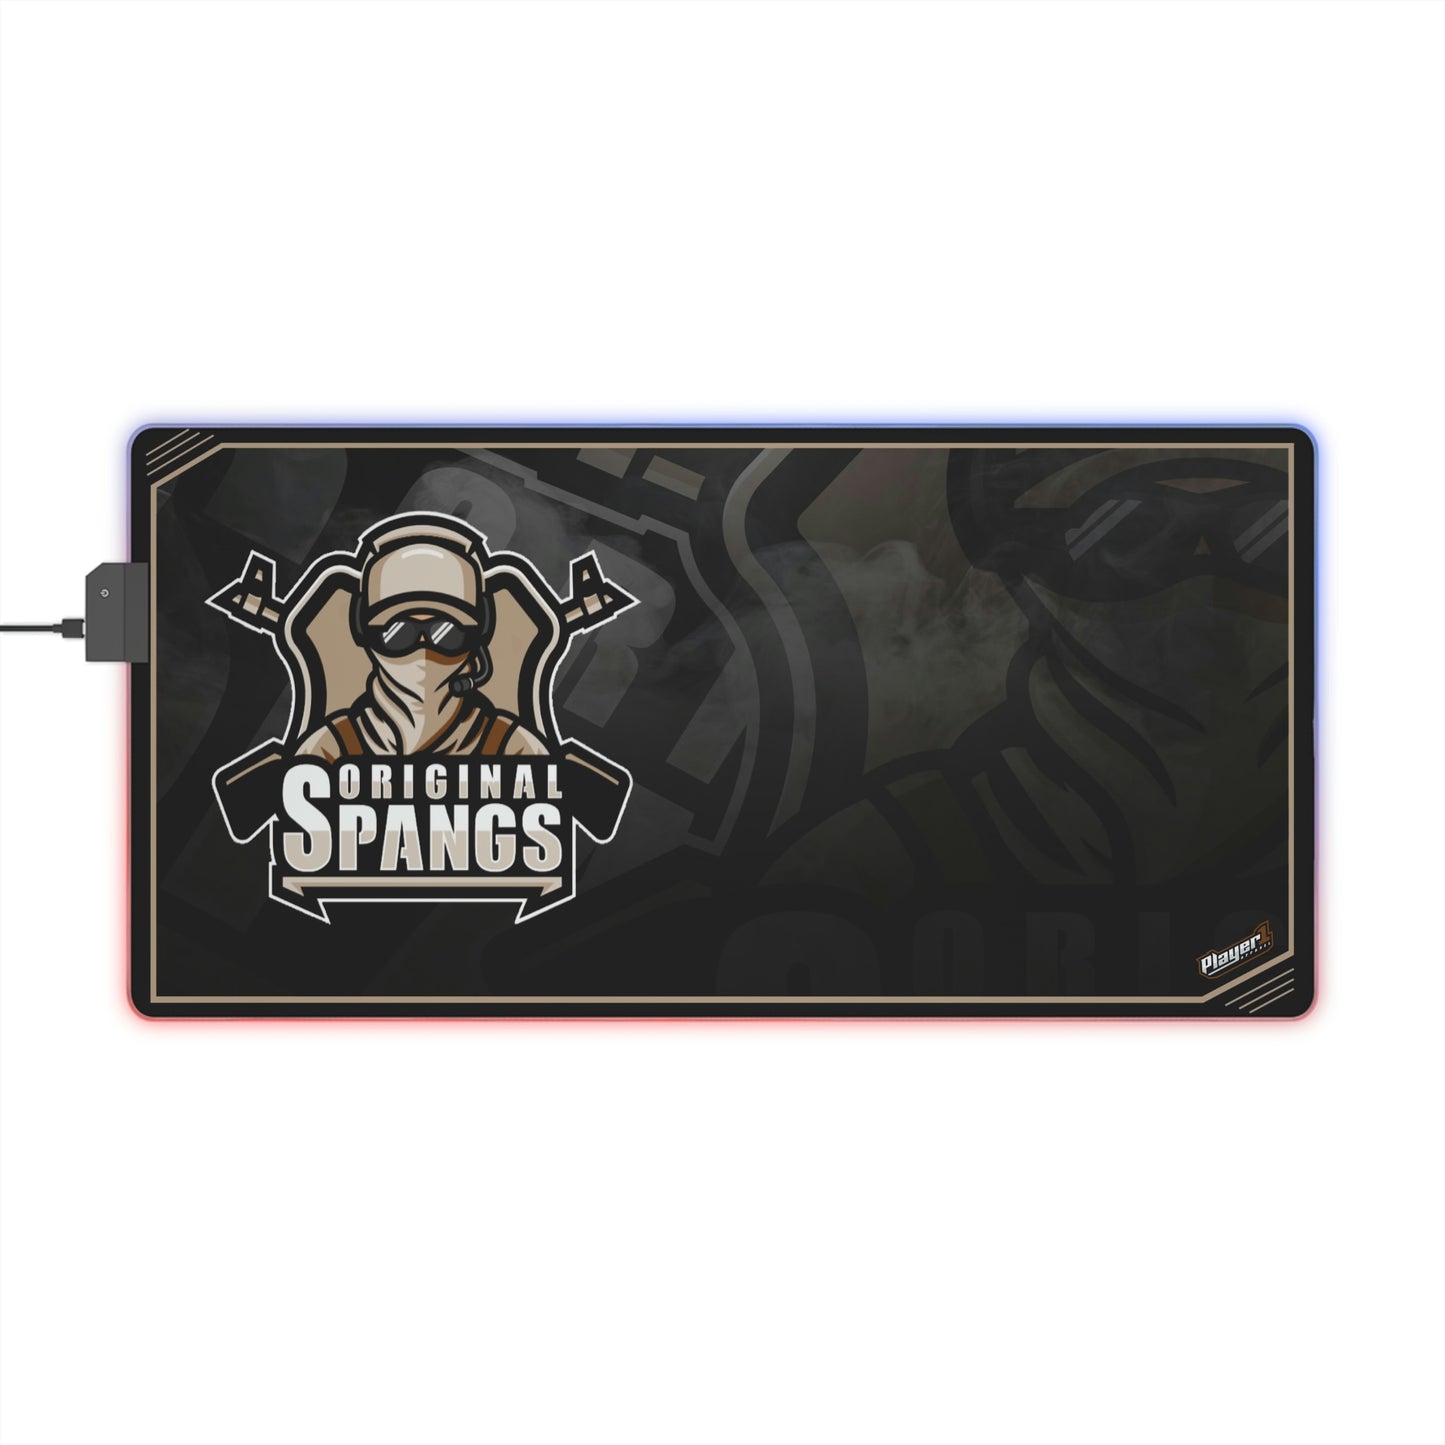 Spangs LED Gaming Mouse Pad